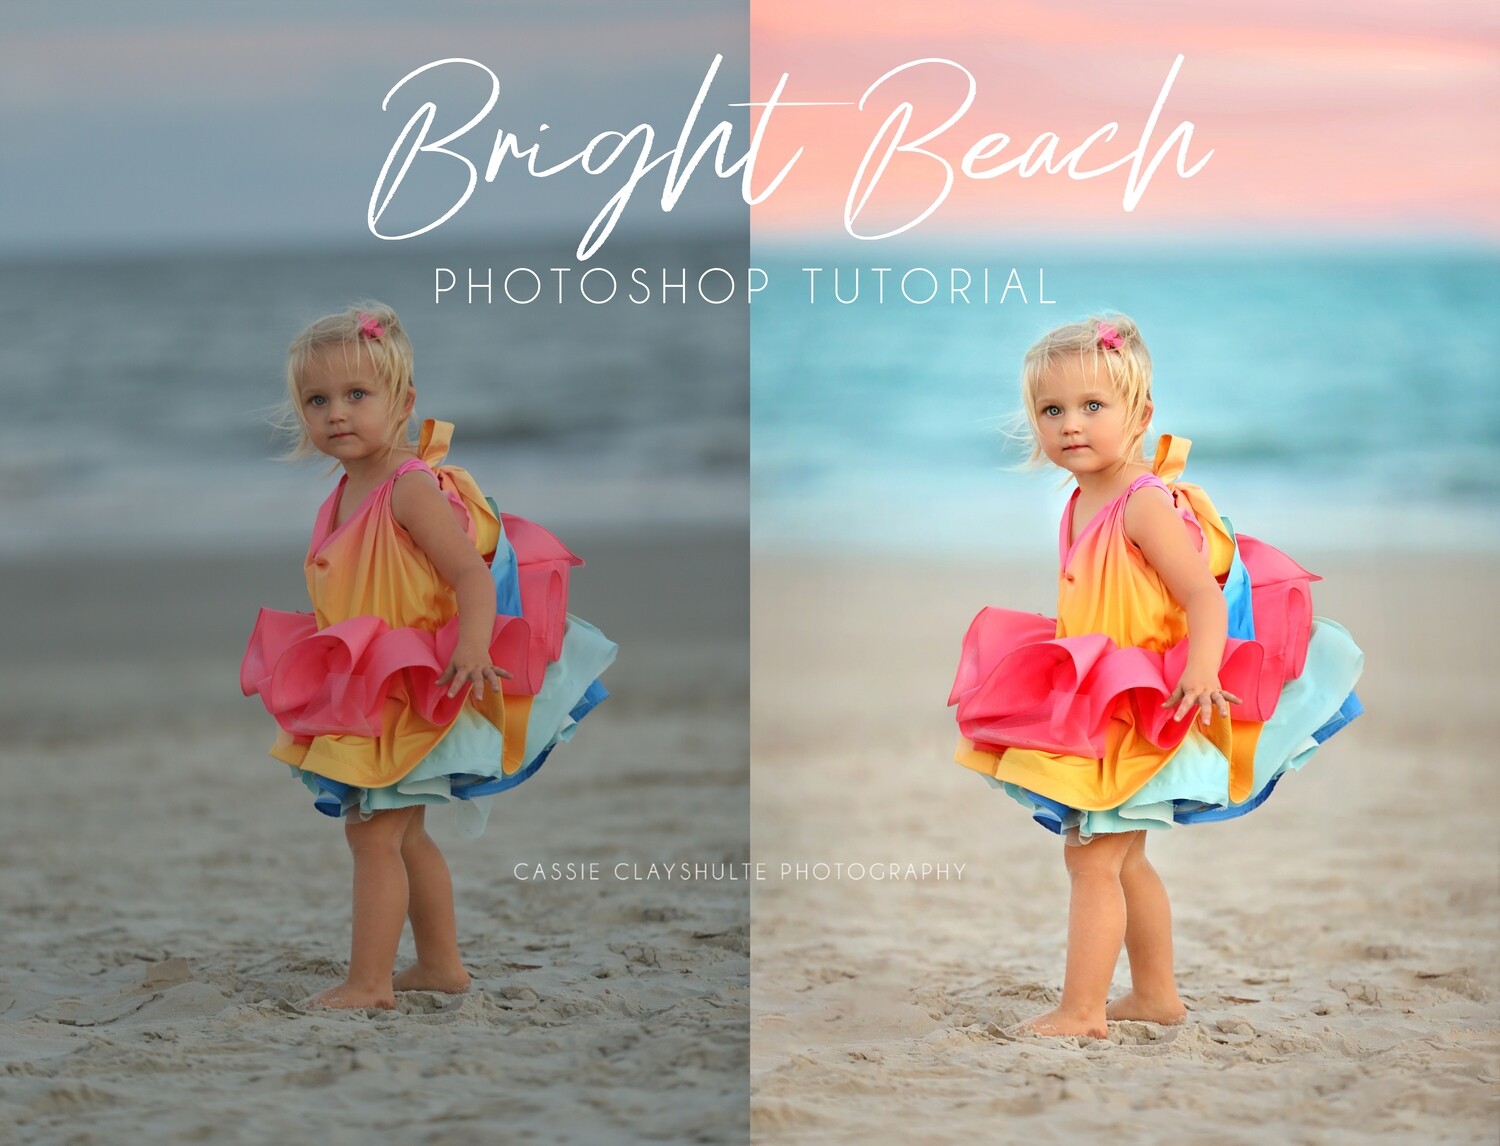 Bright Beach Photoshop Tutorial